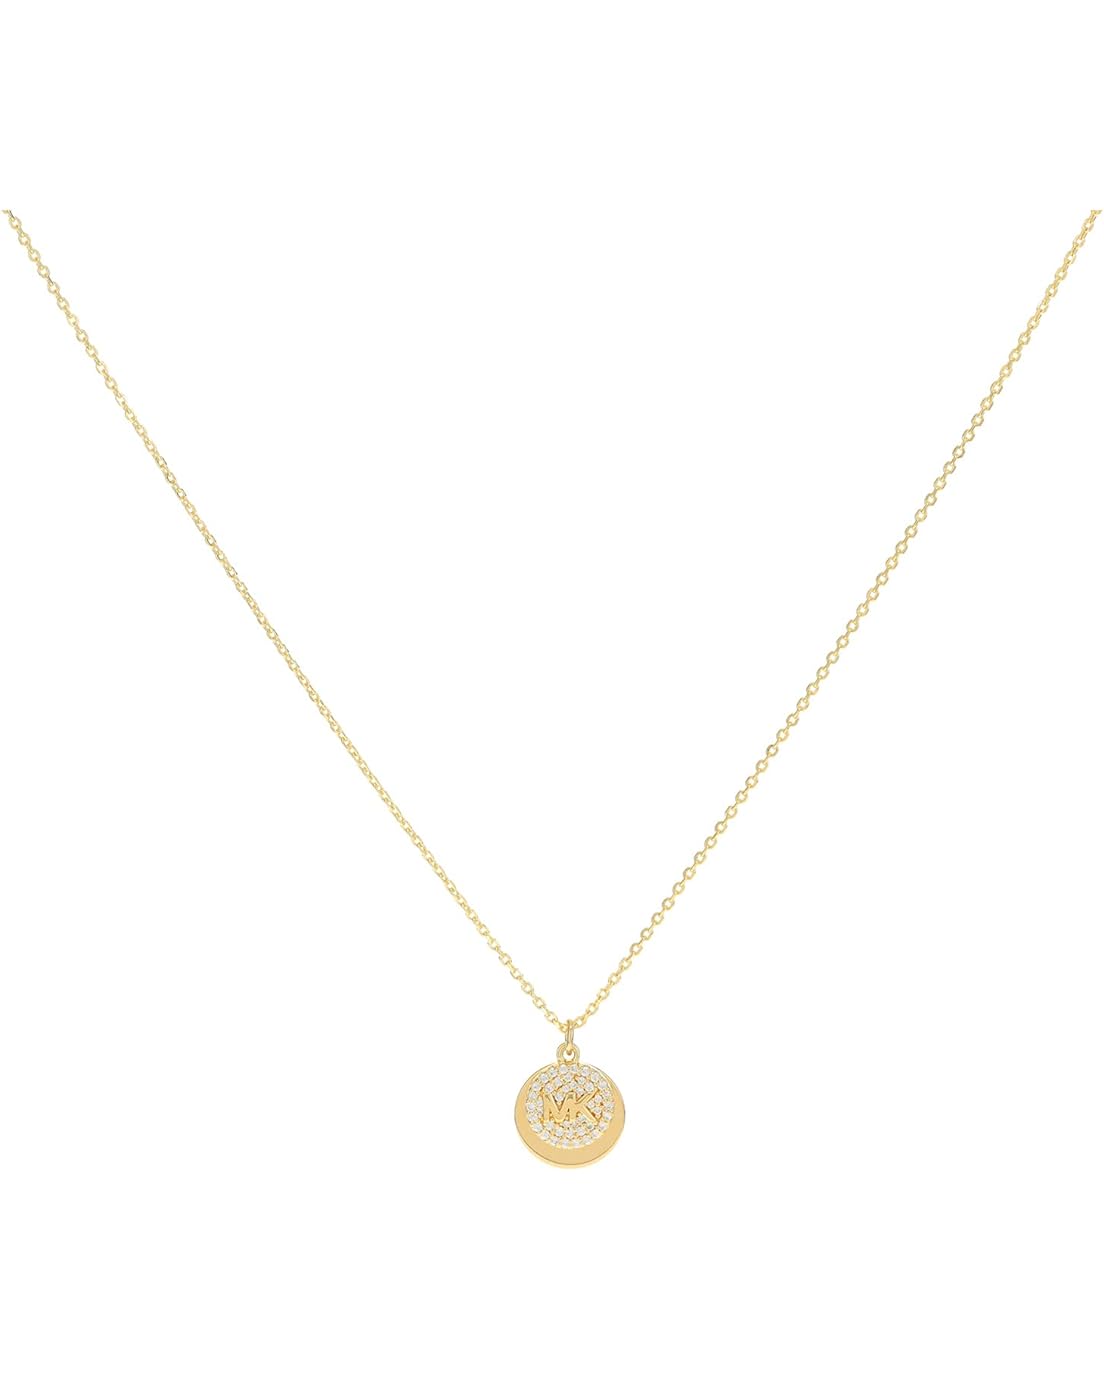 Michael Kors 14K Gold-Plated Sterling Silver Pave Engravable Pendant Necklace